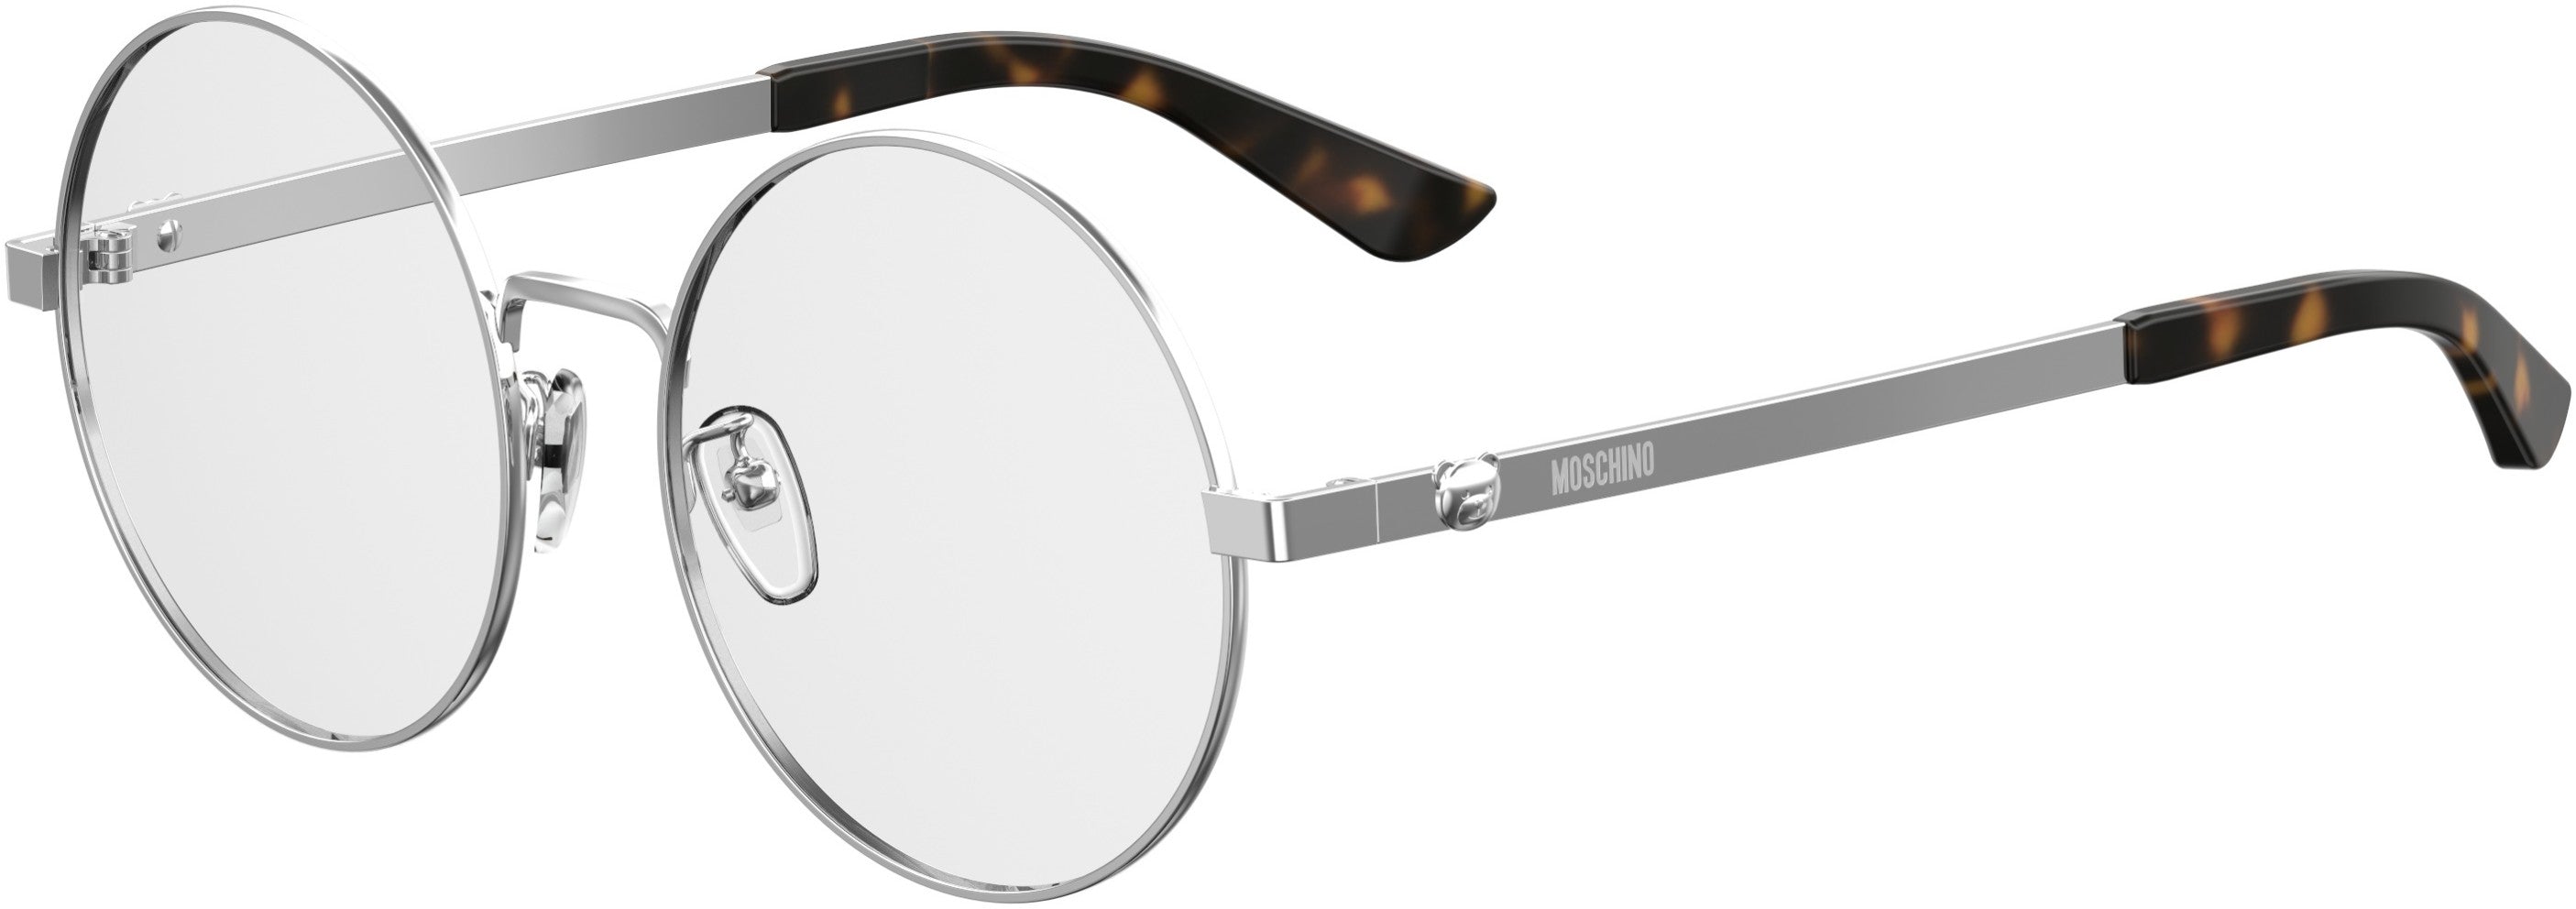  Moschino 538/F Oval Modified Eyeglasses 0010-0010  Palladium (00 Demo Lens)